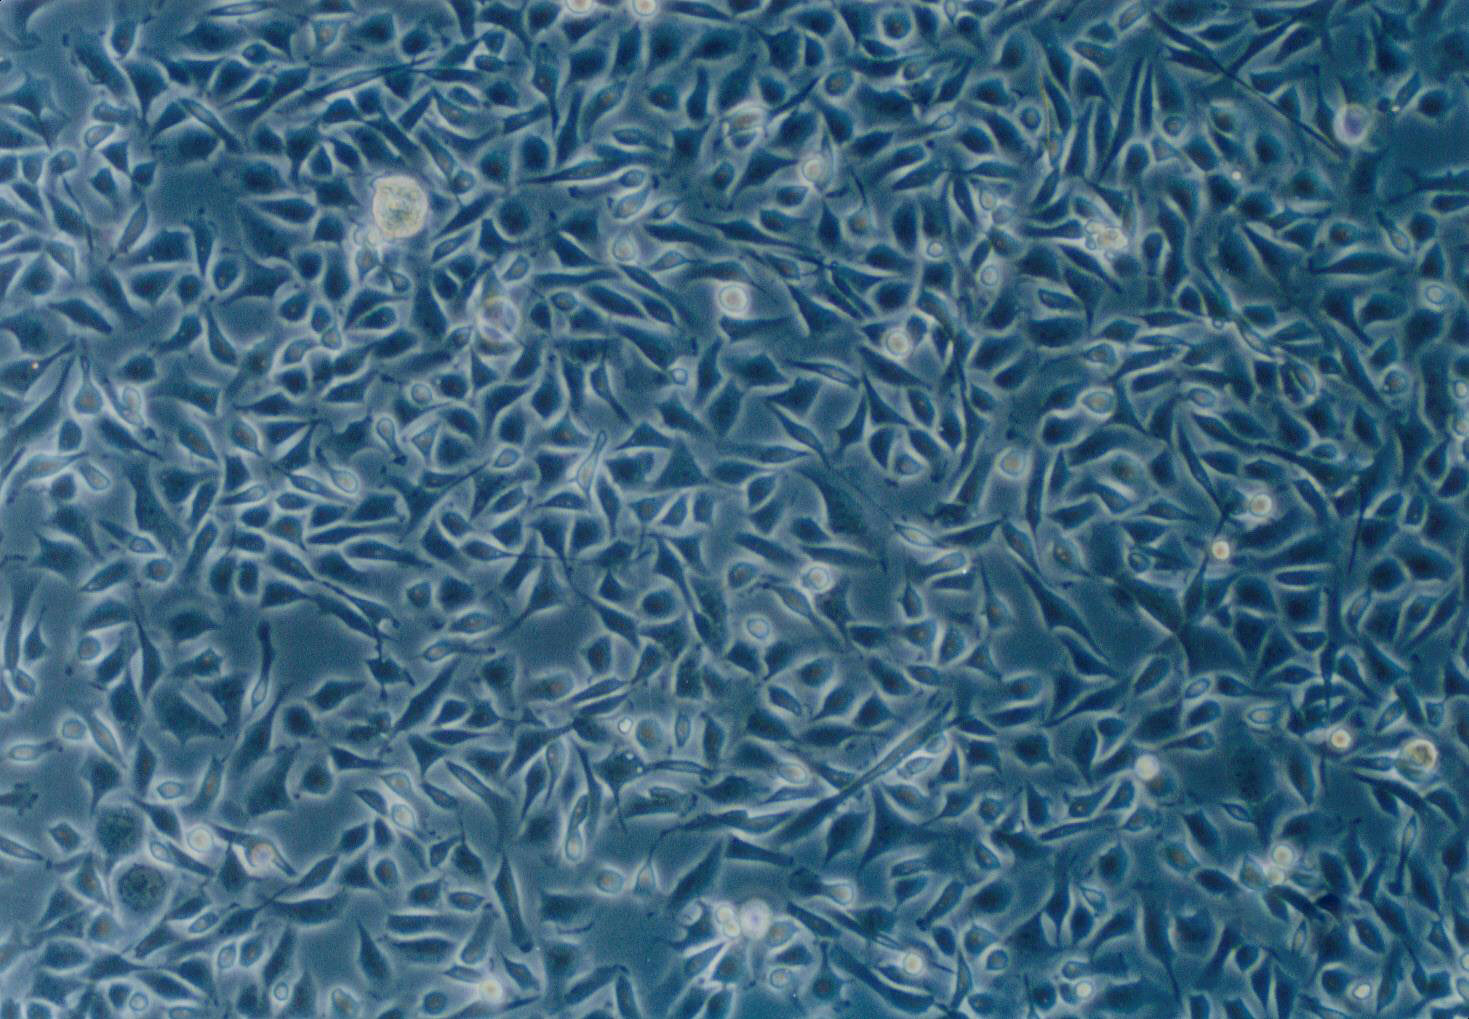 LUDLU-1 Cell|人肺癌鳞癌细胞,LUDLU-1 Cell